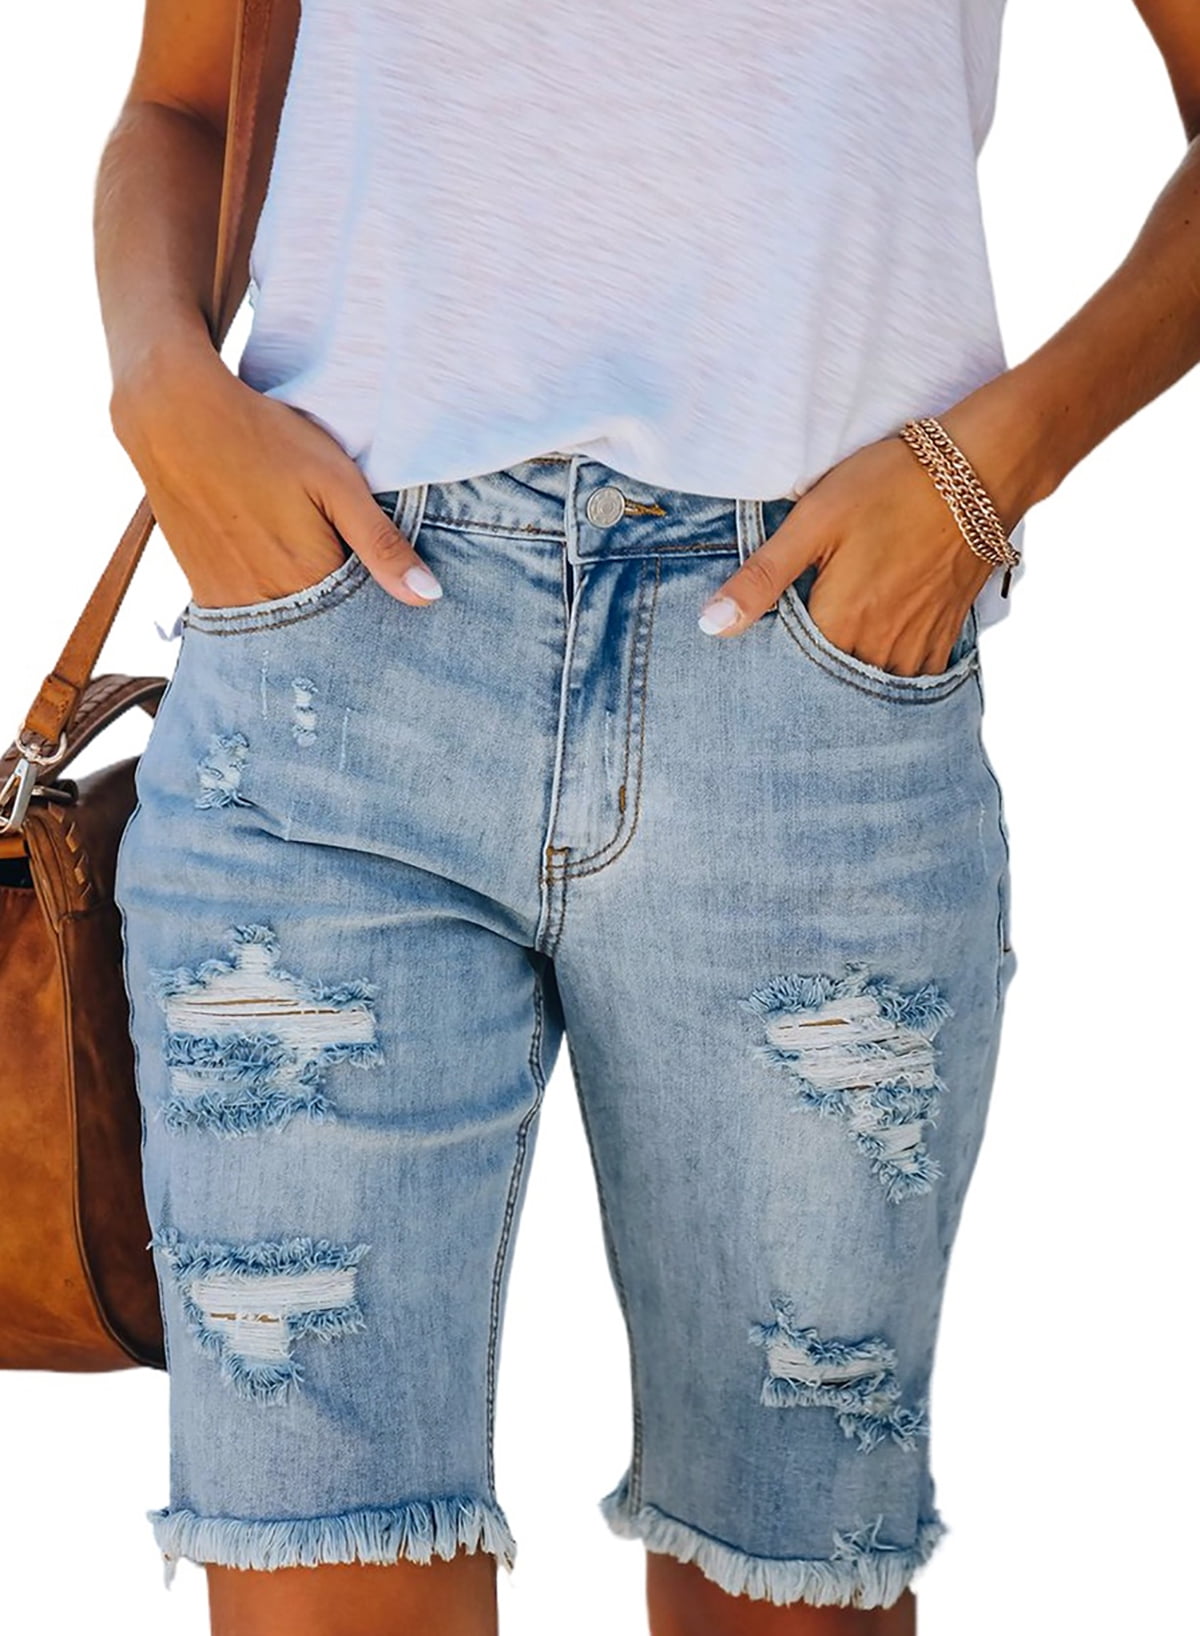 Oflive Women's Sexy Low Rise Mini Denim Shorts Jeans Hot Pants 